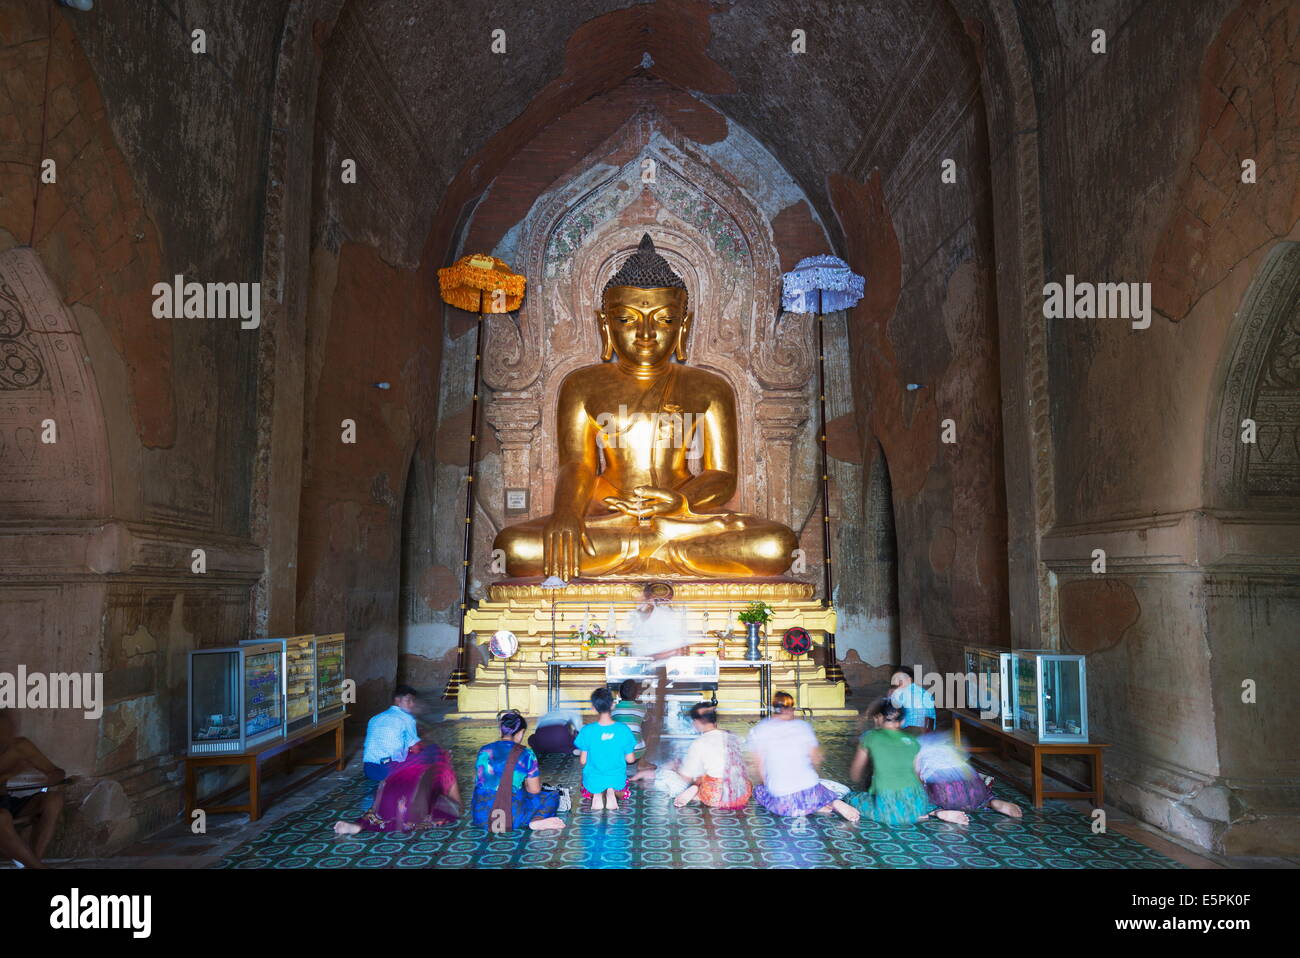 Persone in preghiera, Htilominlo Pahto tempio, Bagan (pagano), Myanmar (Birmania), Asia Foto Stock